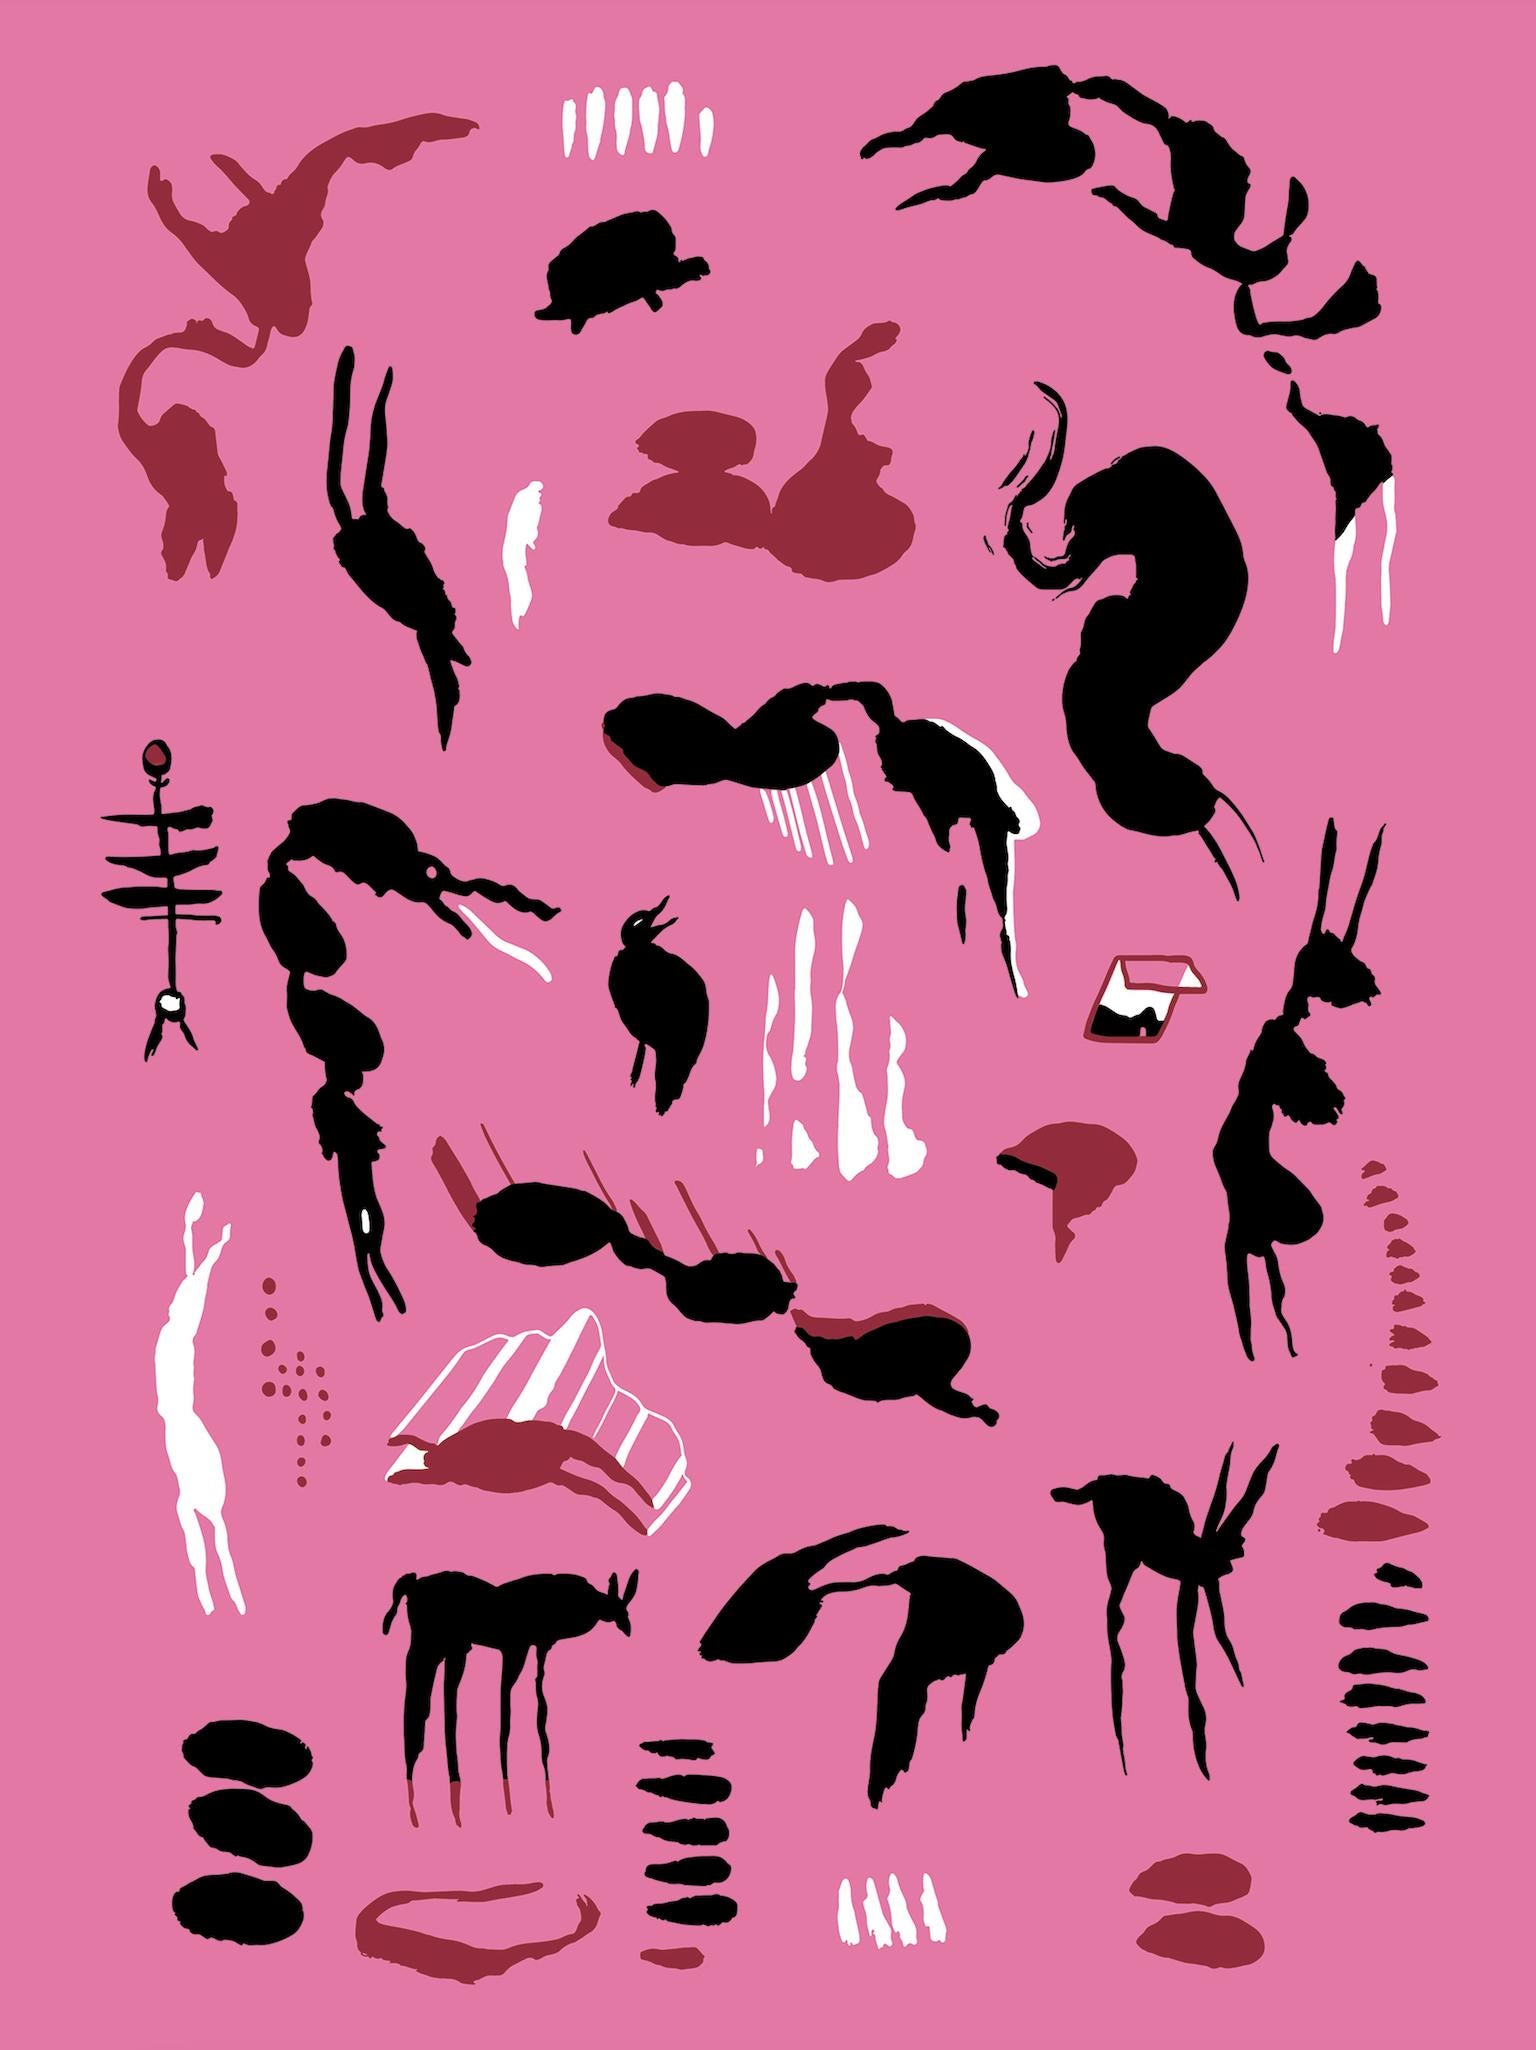 Alejandra España  Figurative Print - "Voces de sombras" pink contemporary surrealist serigraphy w/gold leaf